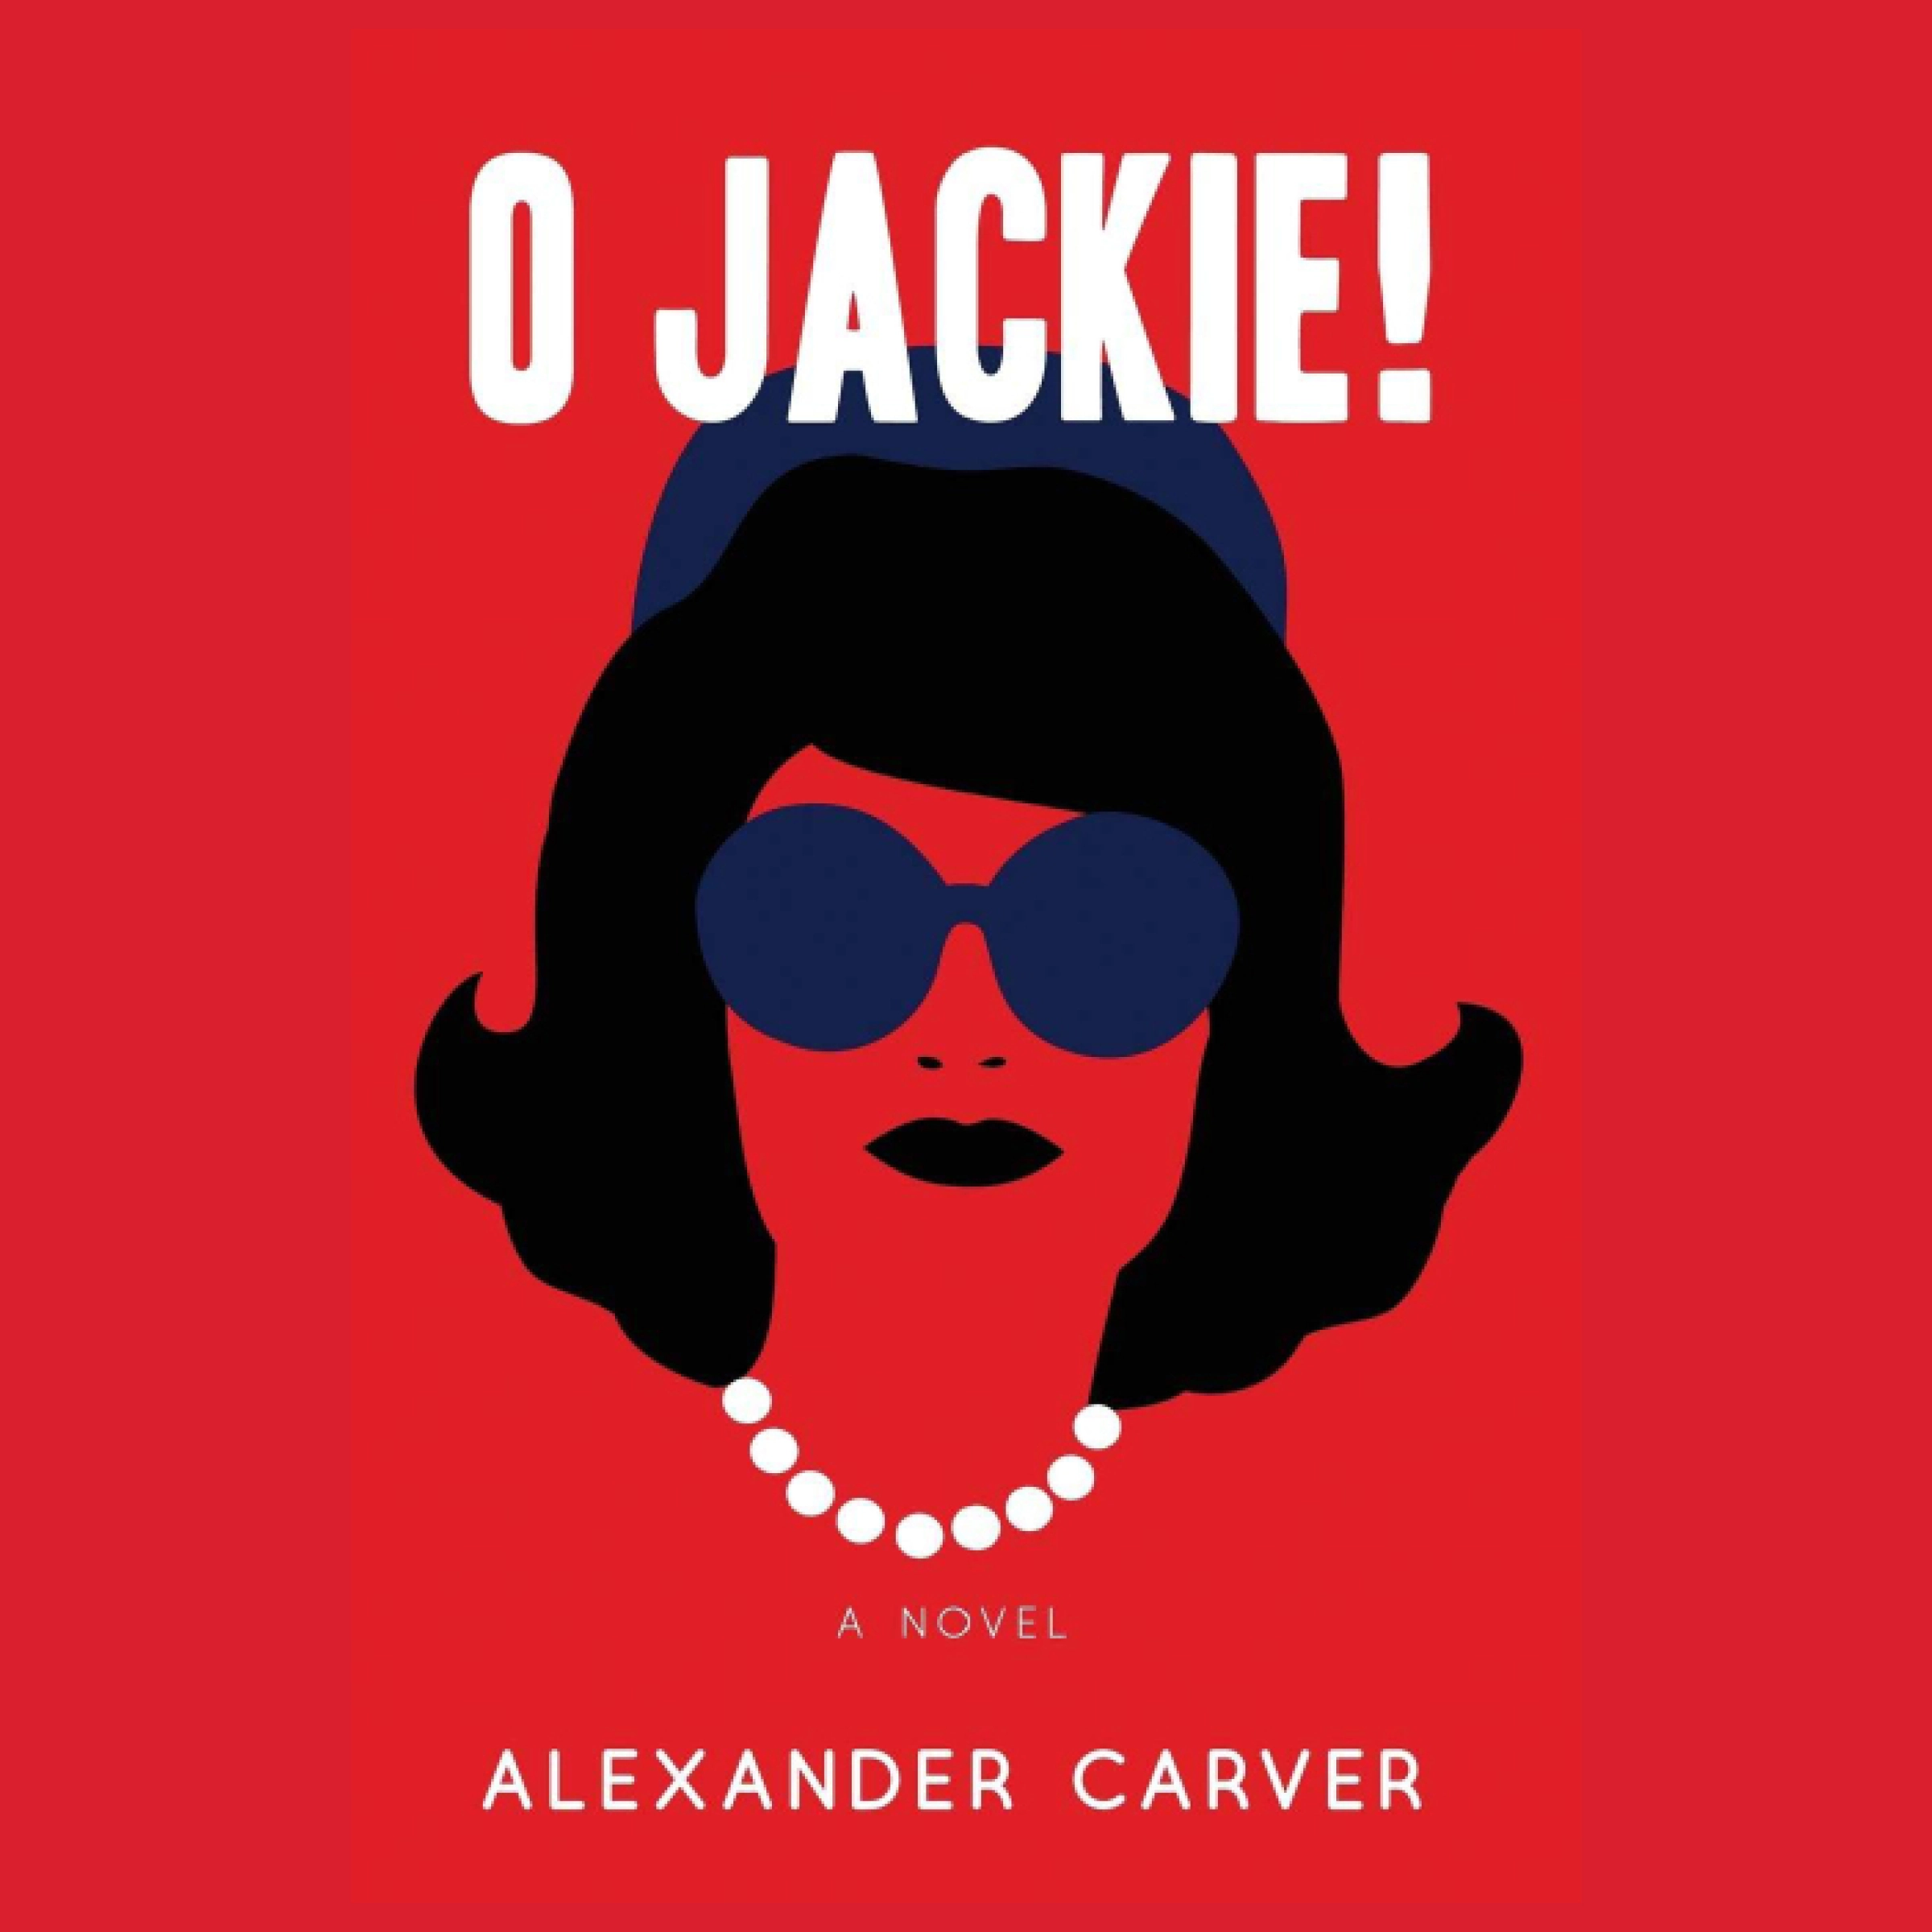 O Jackie! by Alexander Carver Audiobook